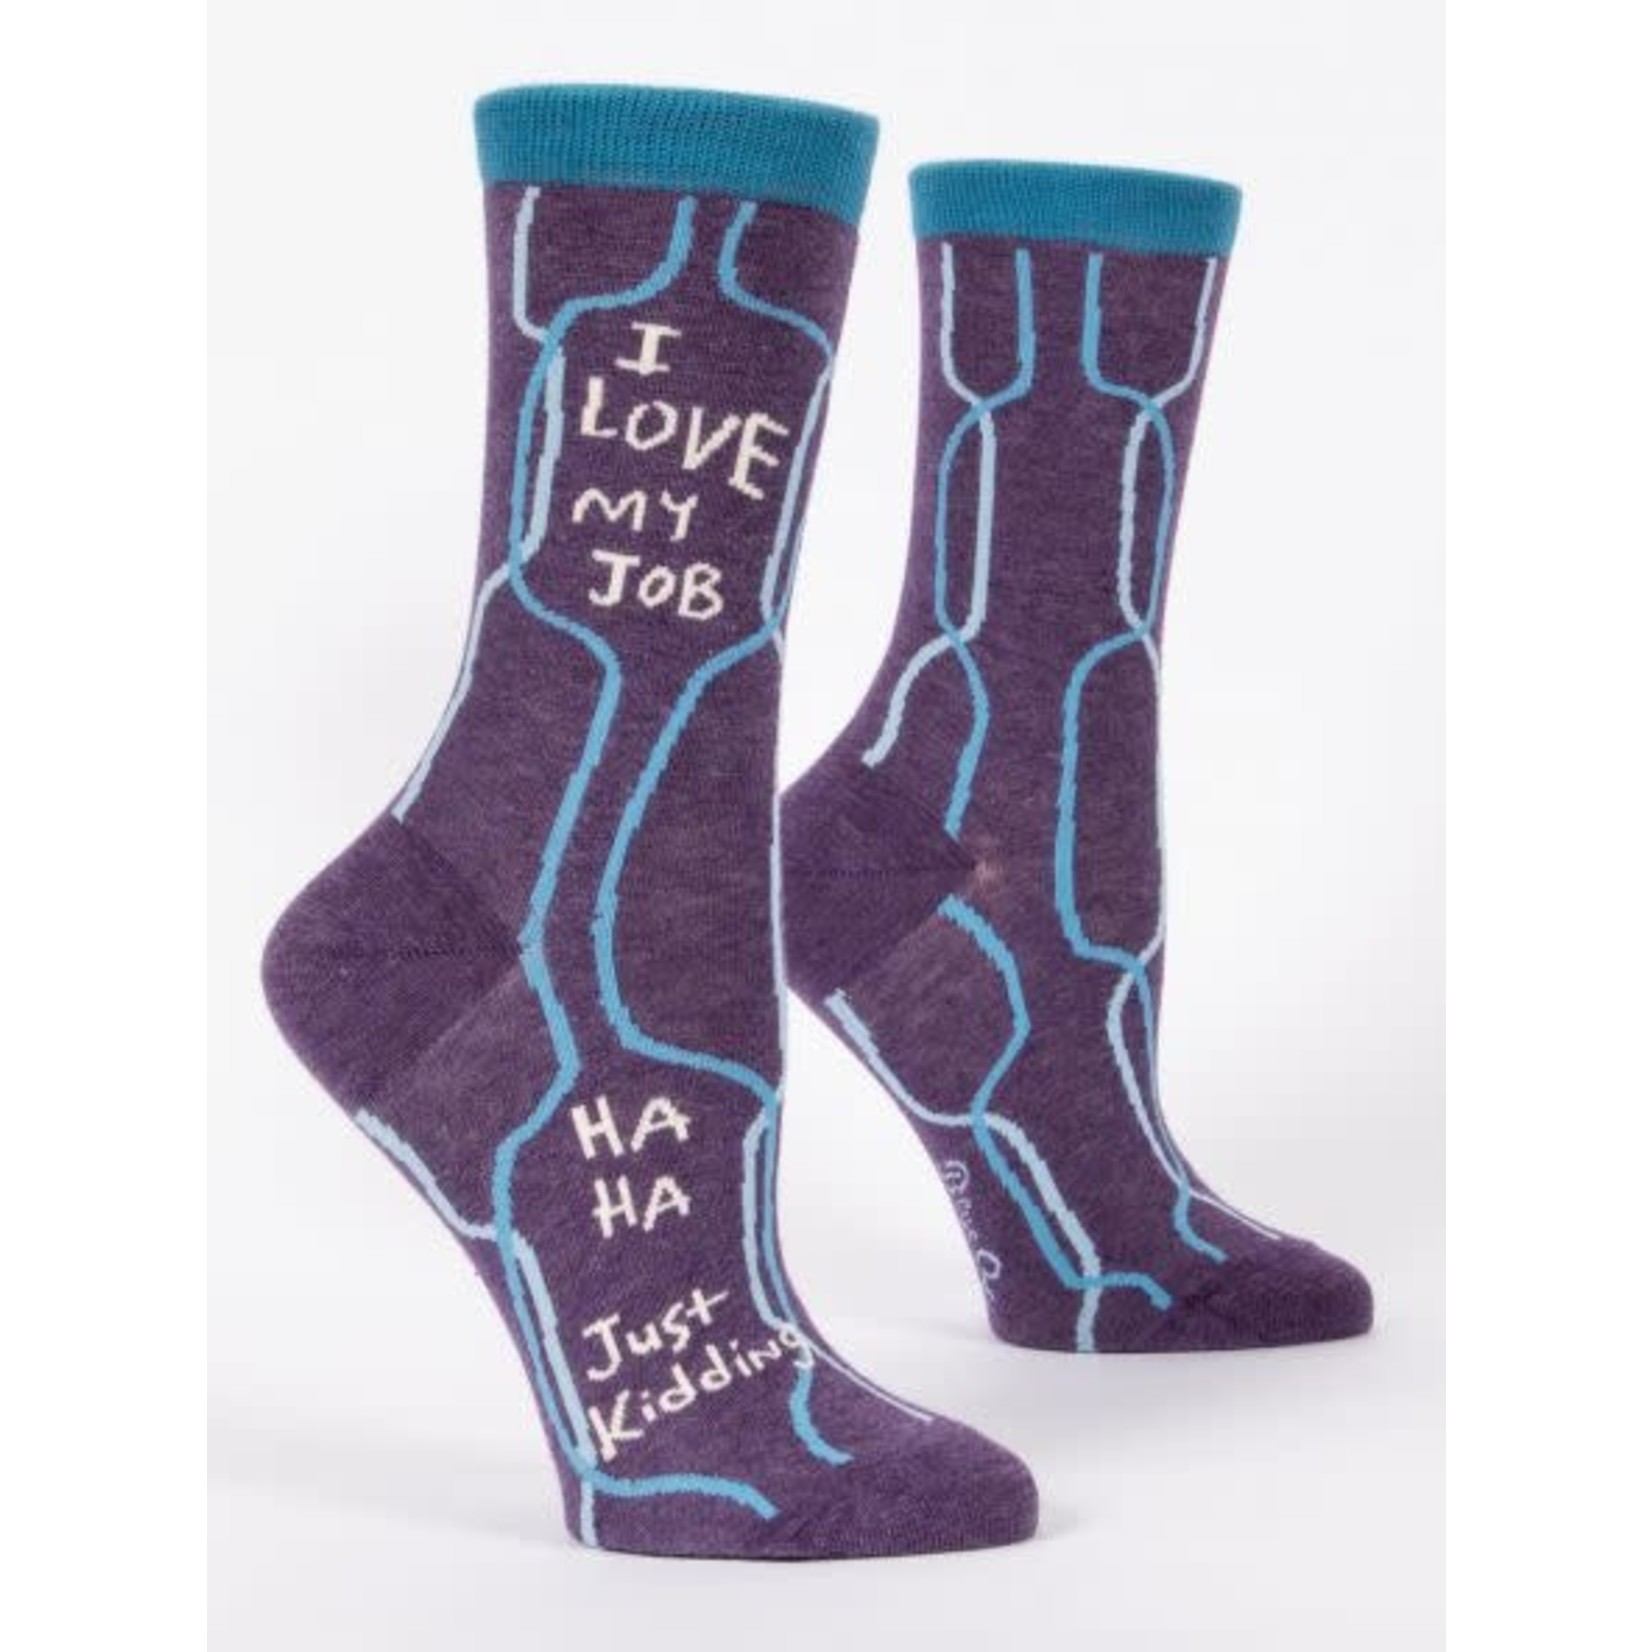 Women's Socks - I Love My Job Ha Ha Just Kidding